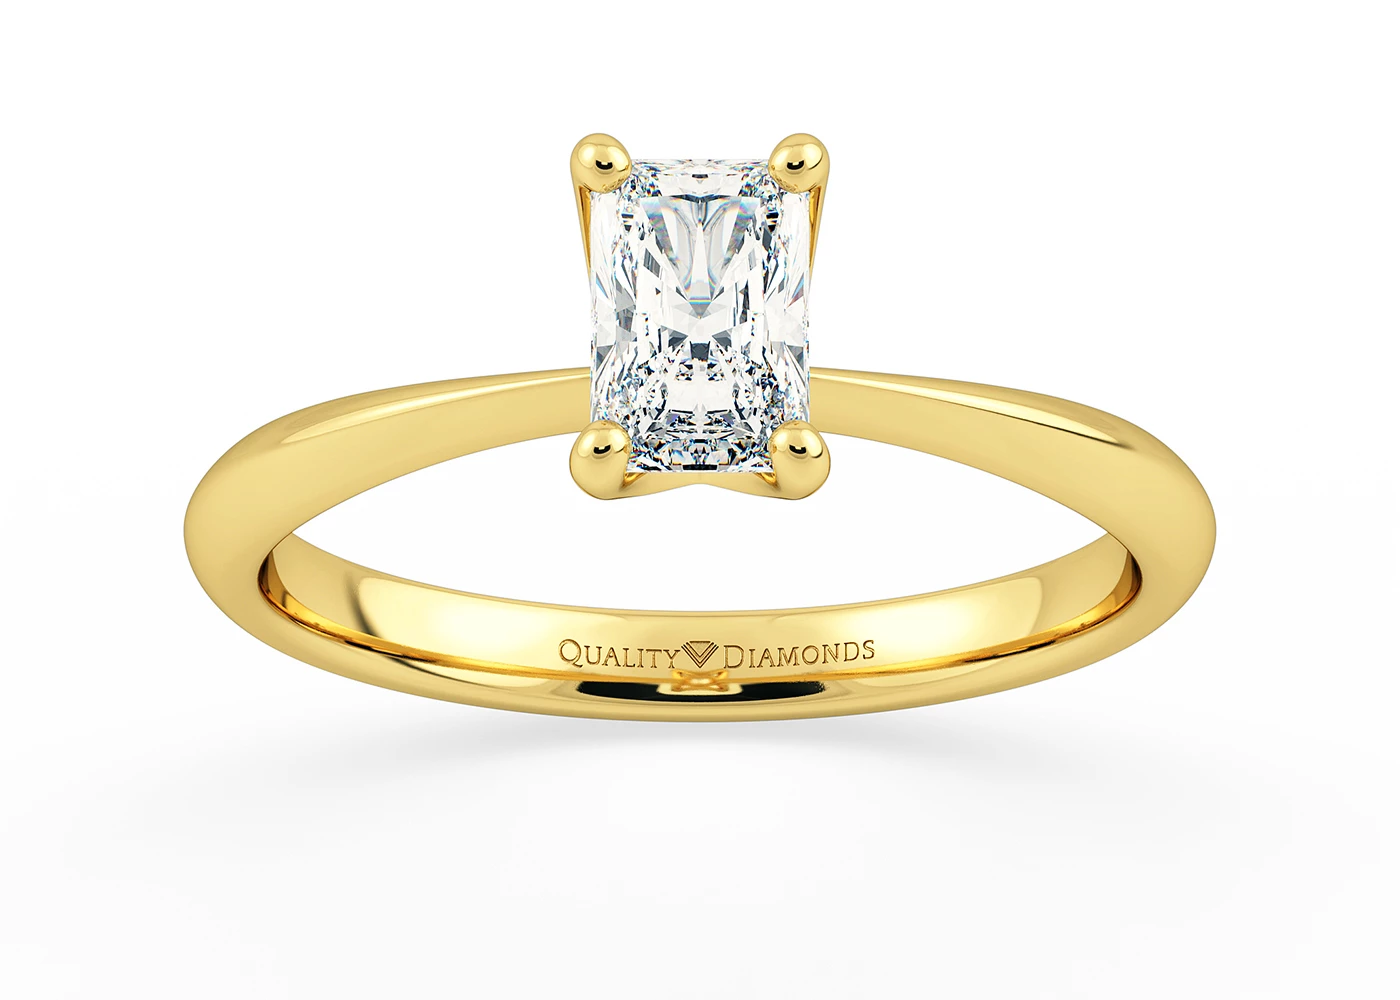 Radiant Amorette Diamond Ring in 18K Yellow Gold